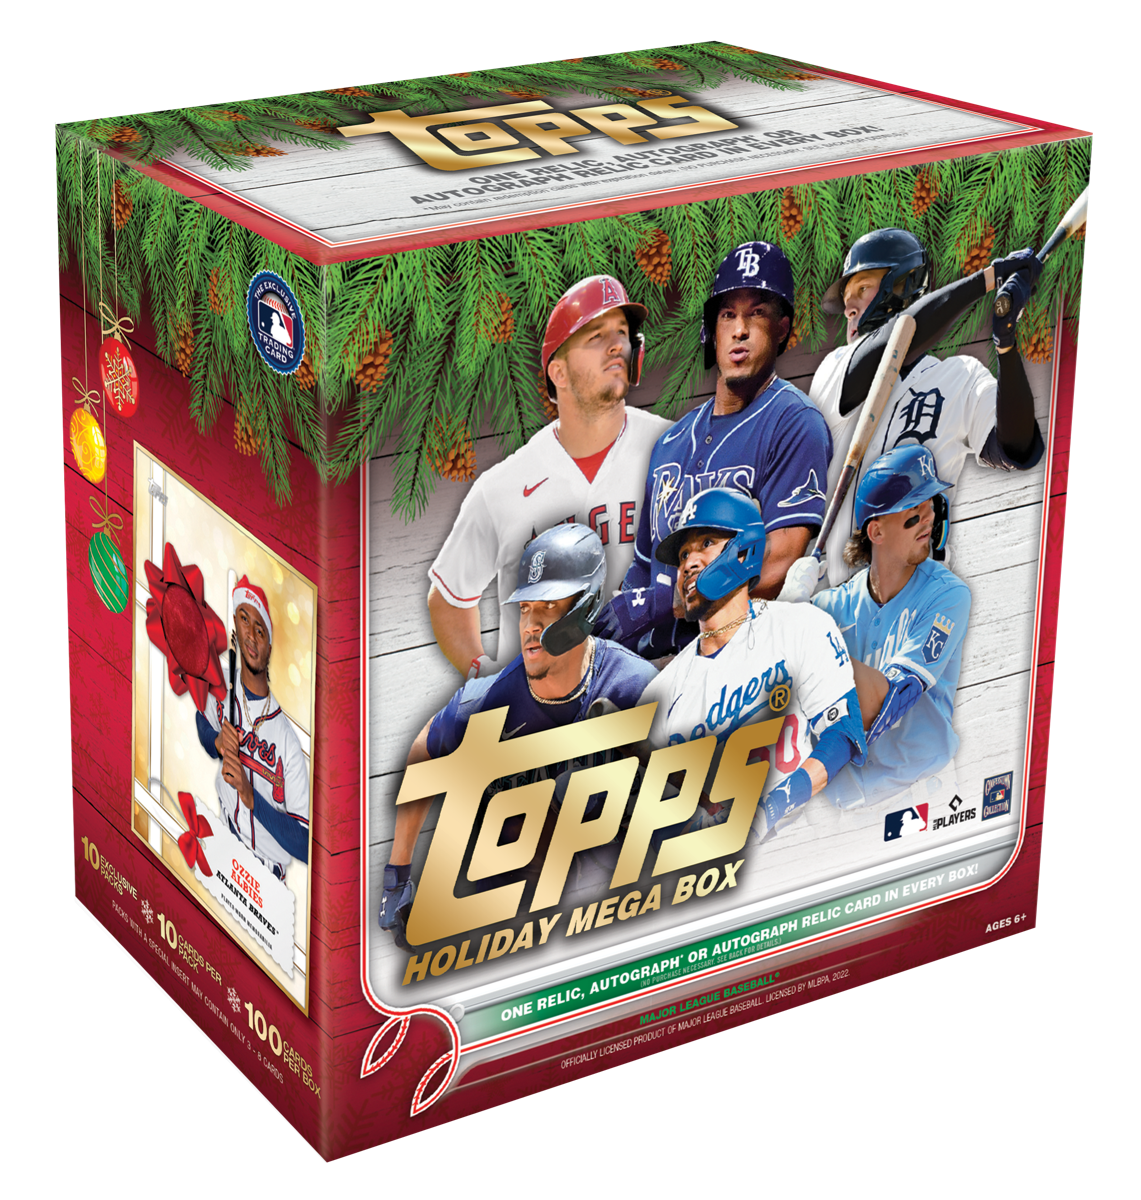 2022 Topps Chrome Baseball Checklist, Set Details, Boxes, Review